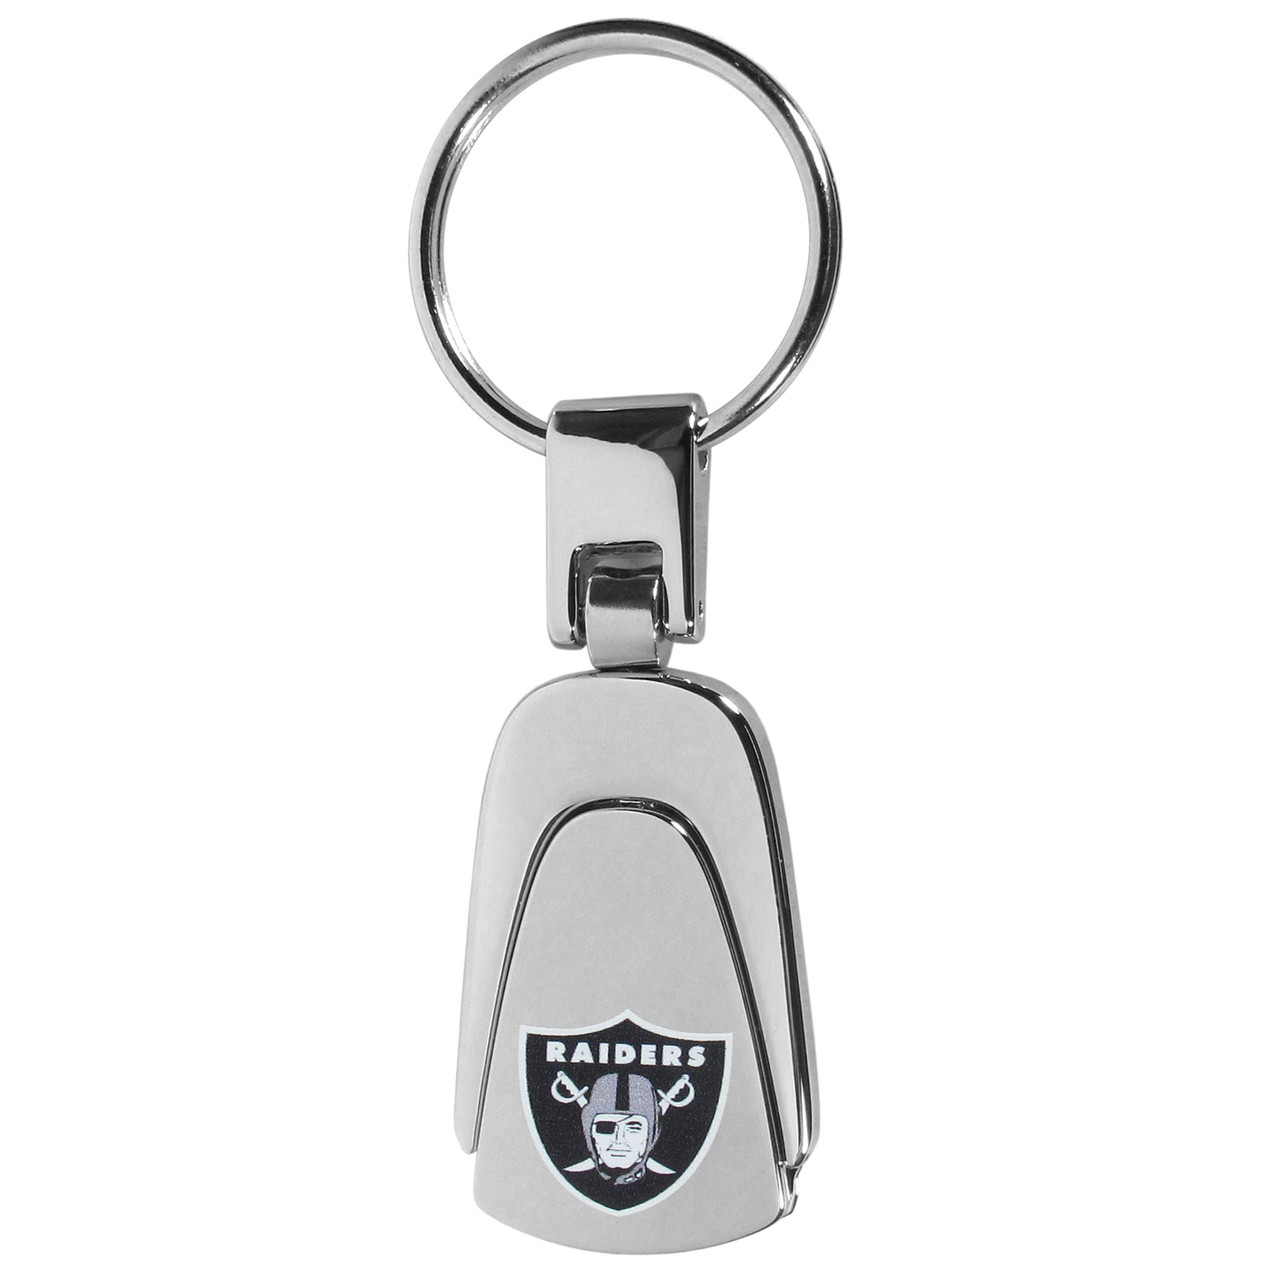 Las Vegas Raiders NFL Football Lanyard Keychain